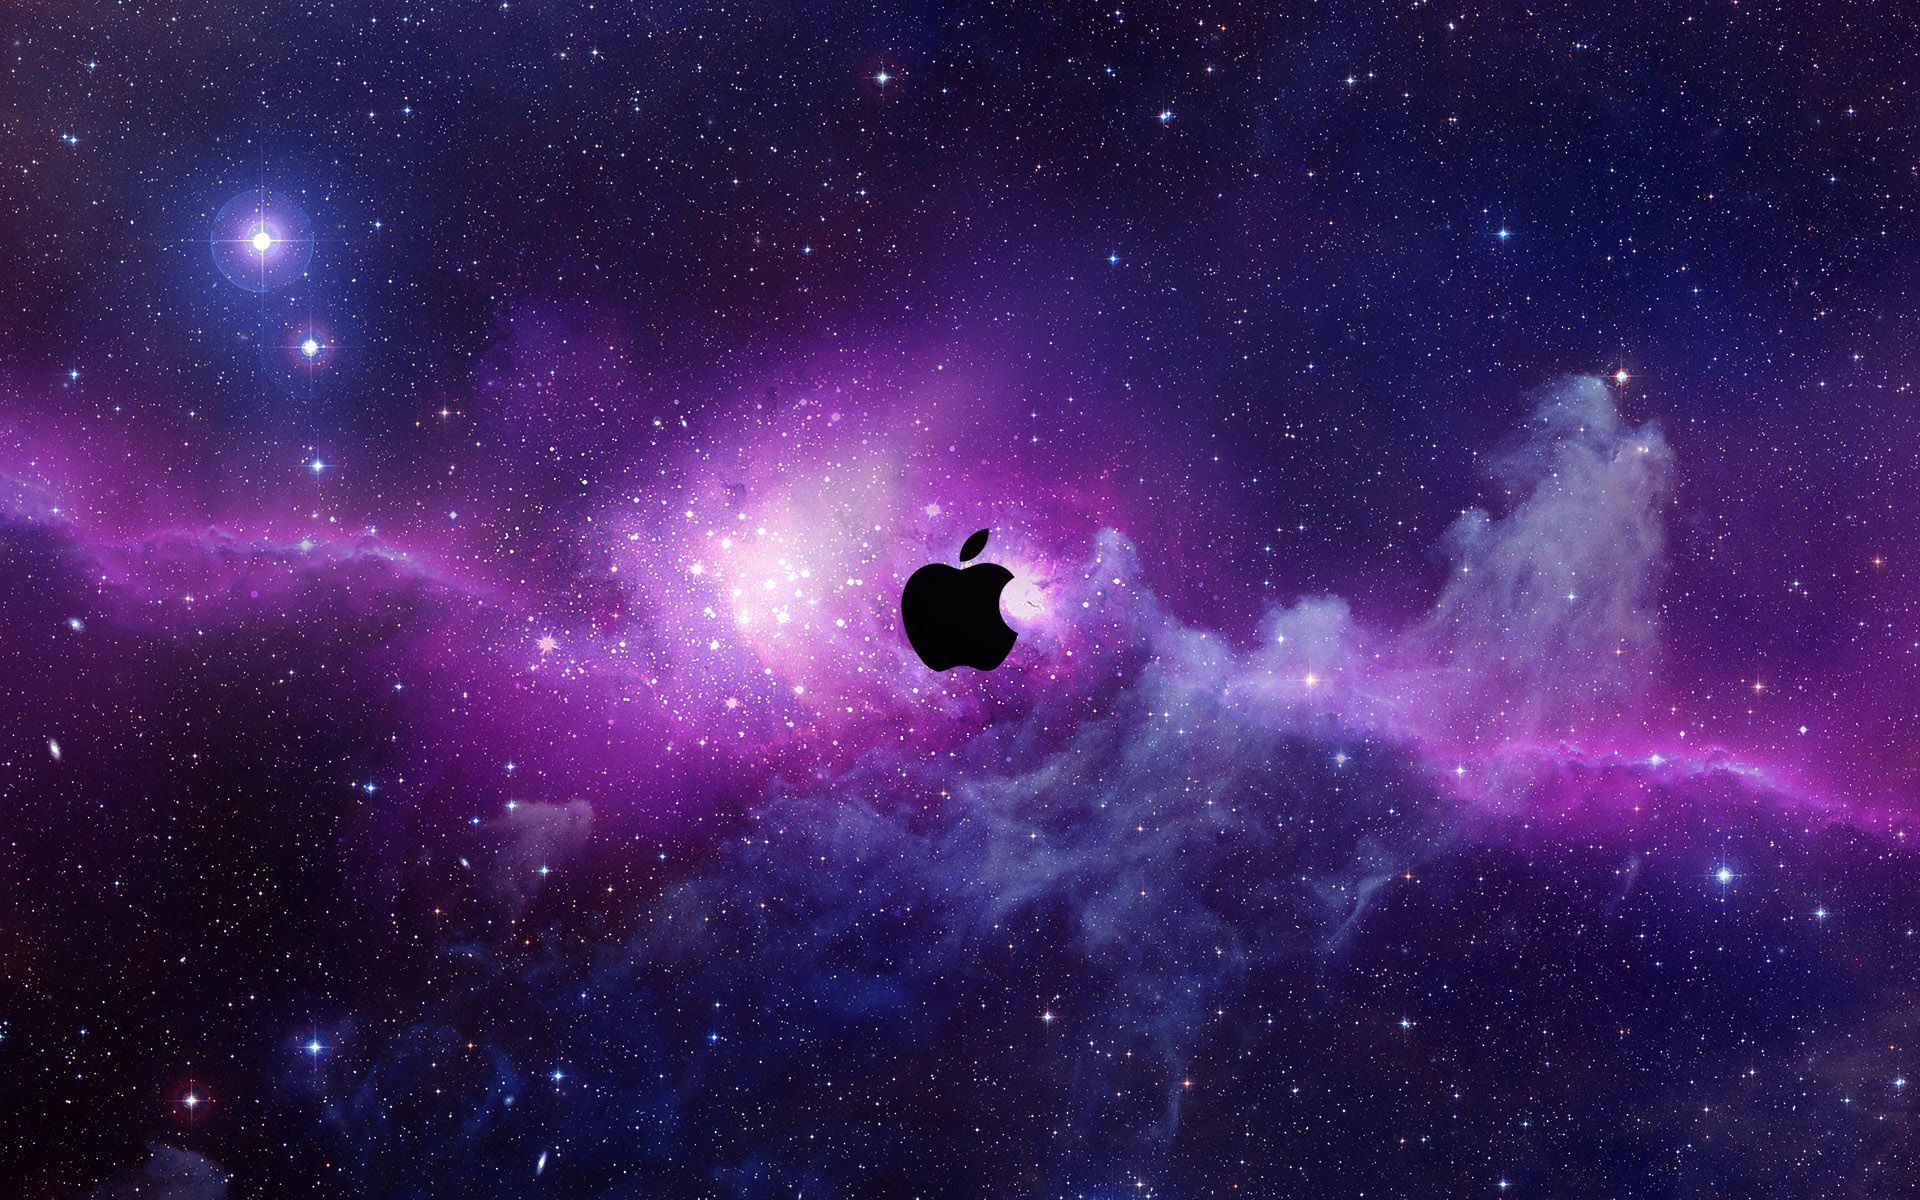 apple1.jpg